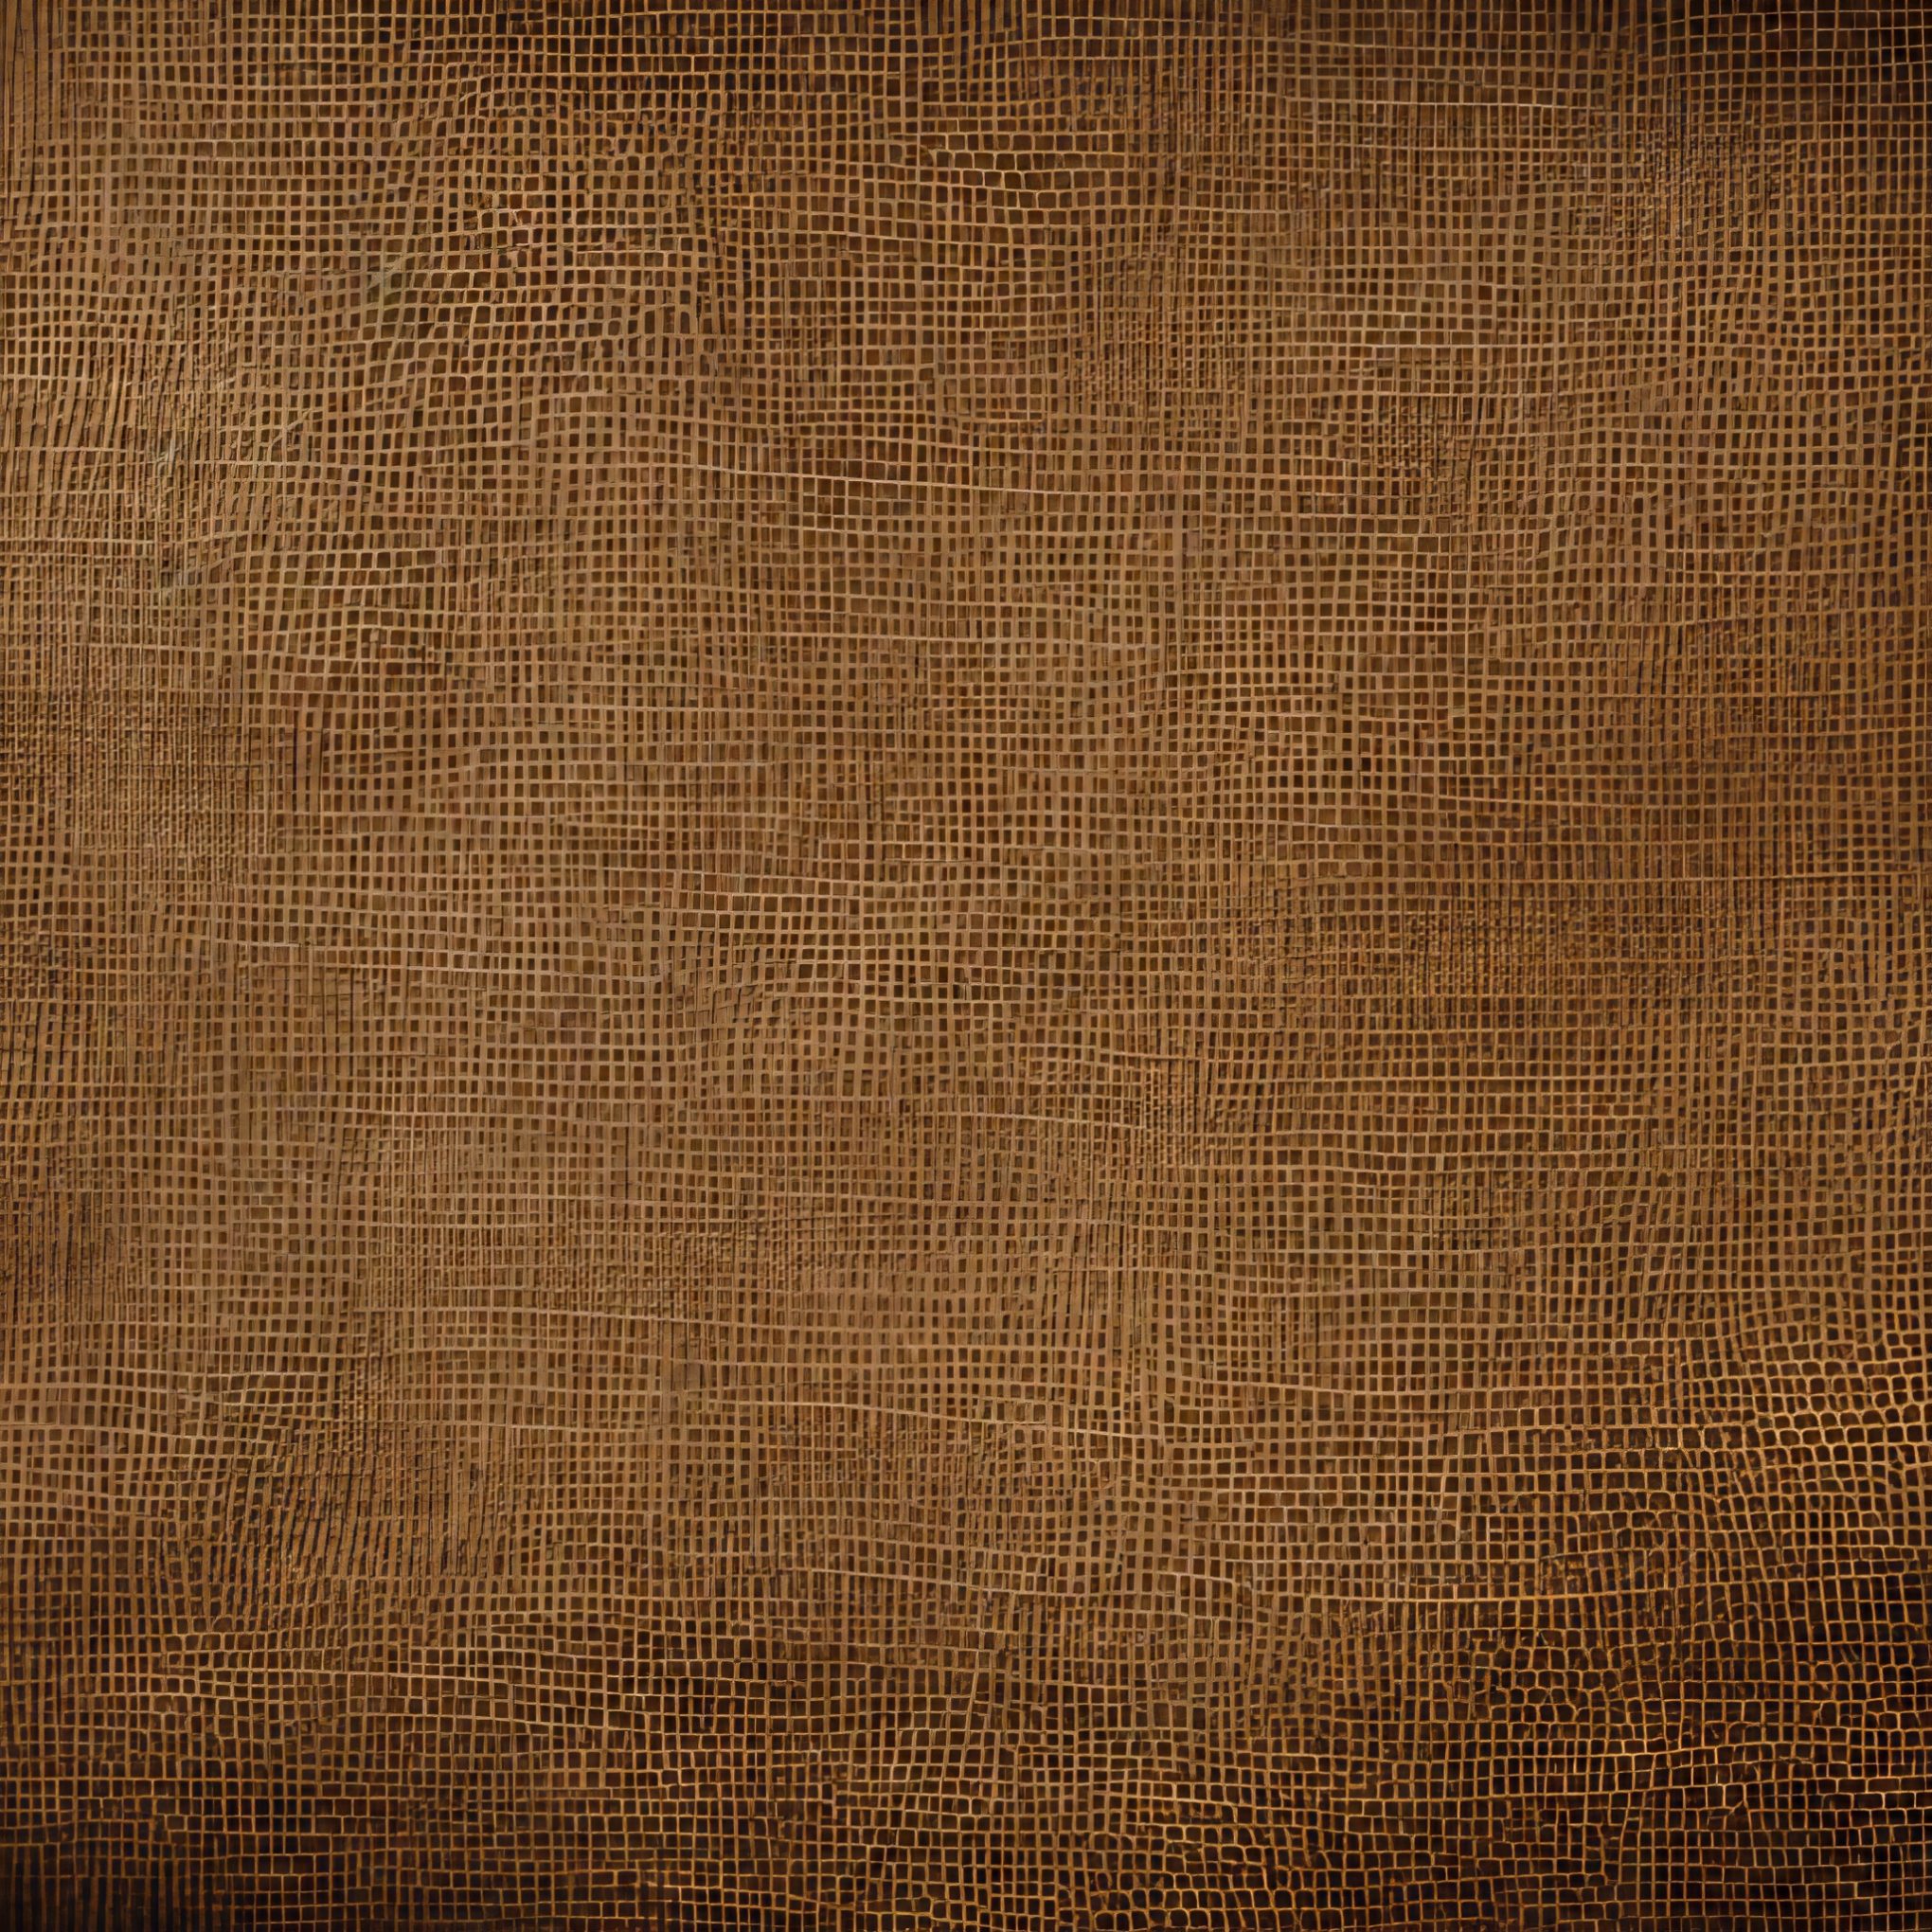 Hessian Sack Cloth Background Texture Free Stock Image